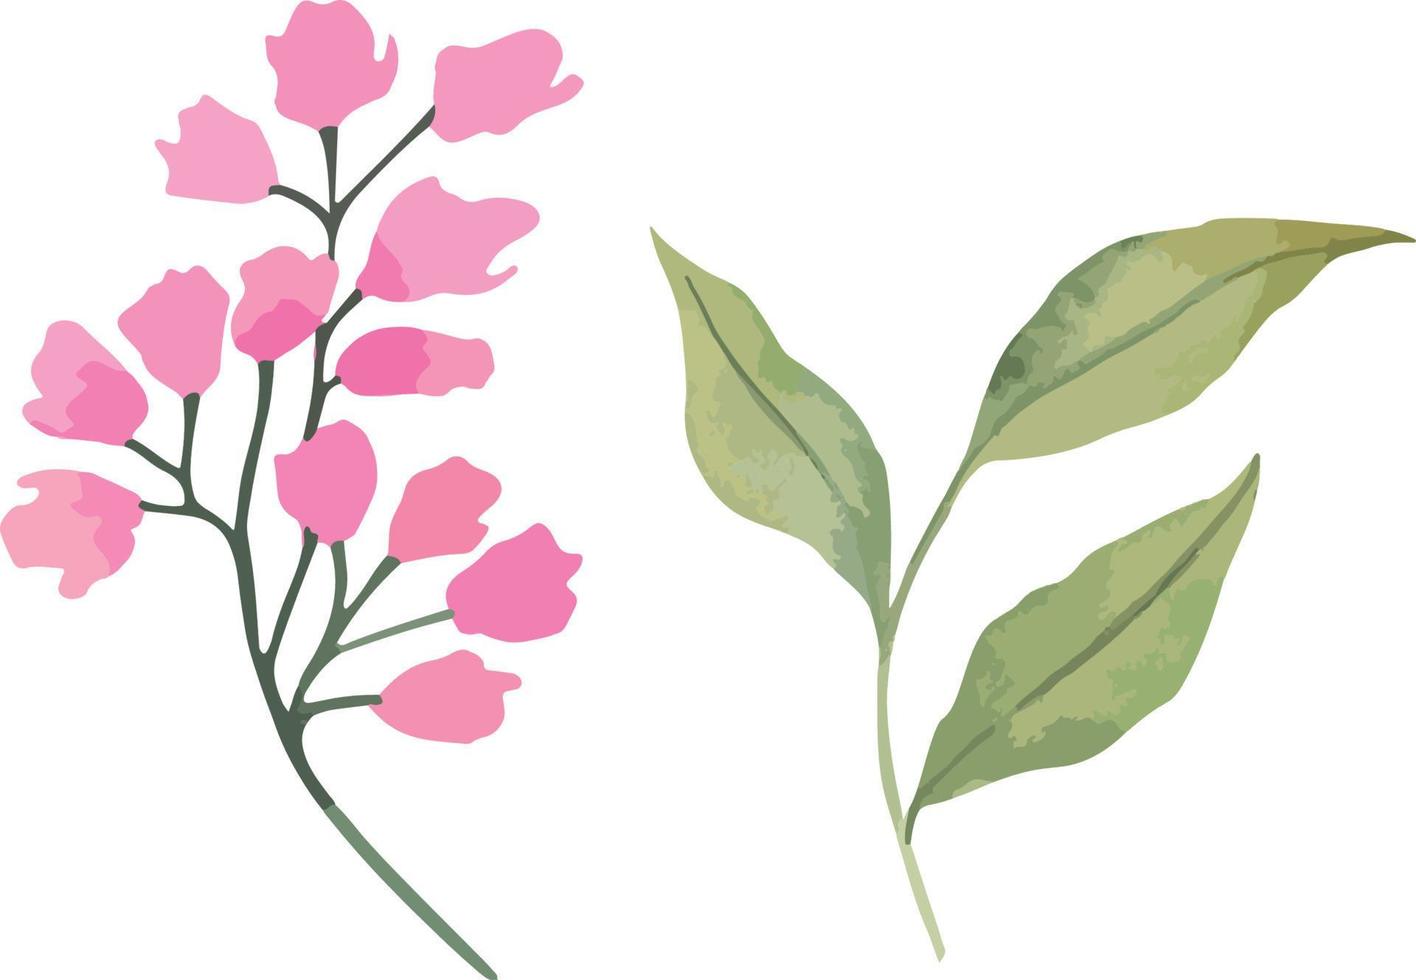 Set of vector watercolor flowers, botanical illustration in magenta color. Ideal for wedding cards, prints, patterns, packaging design.